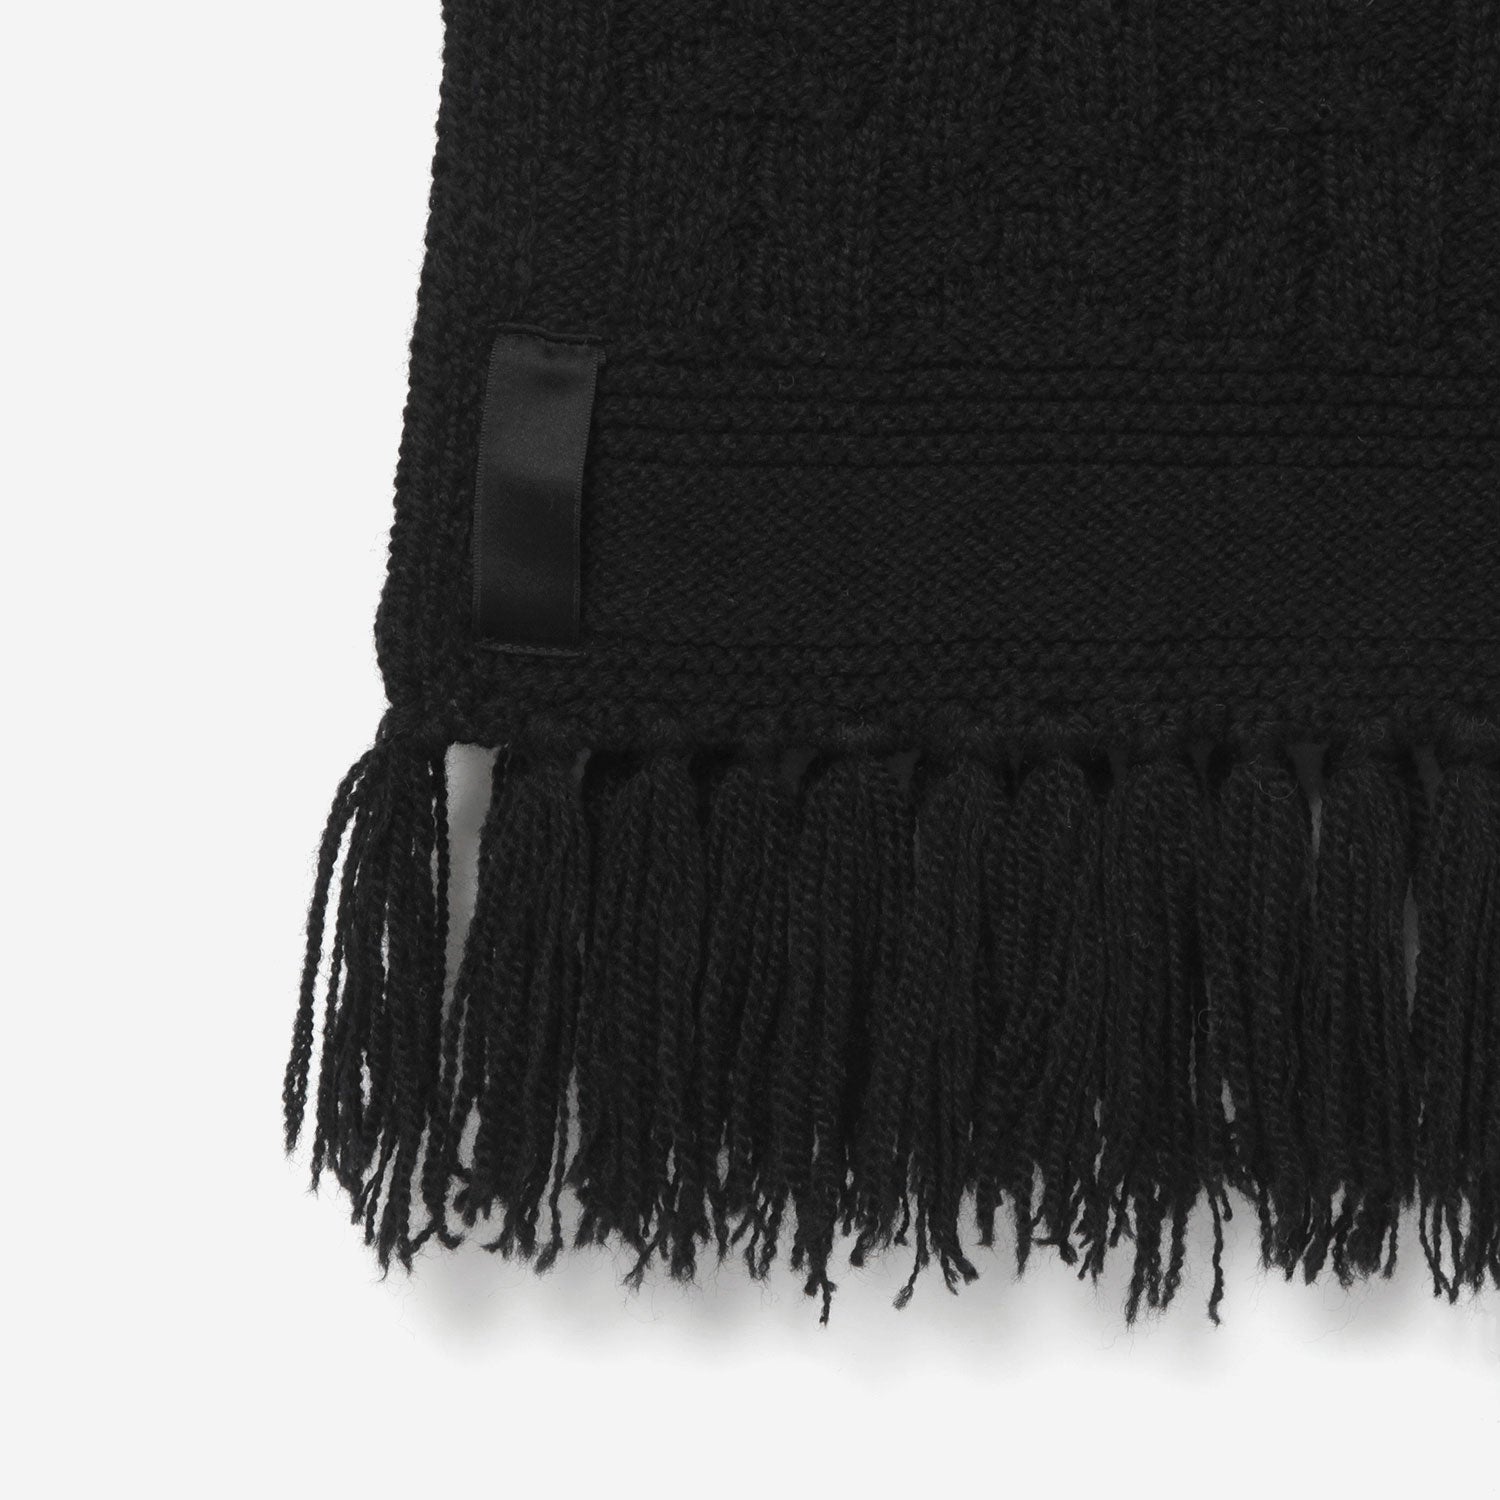 Knit Scarf / black